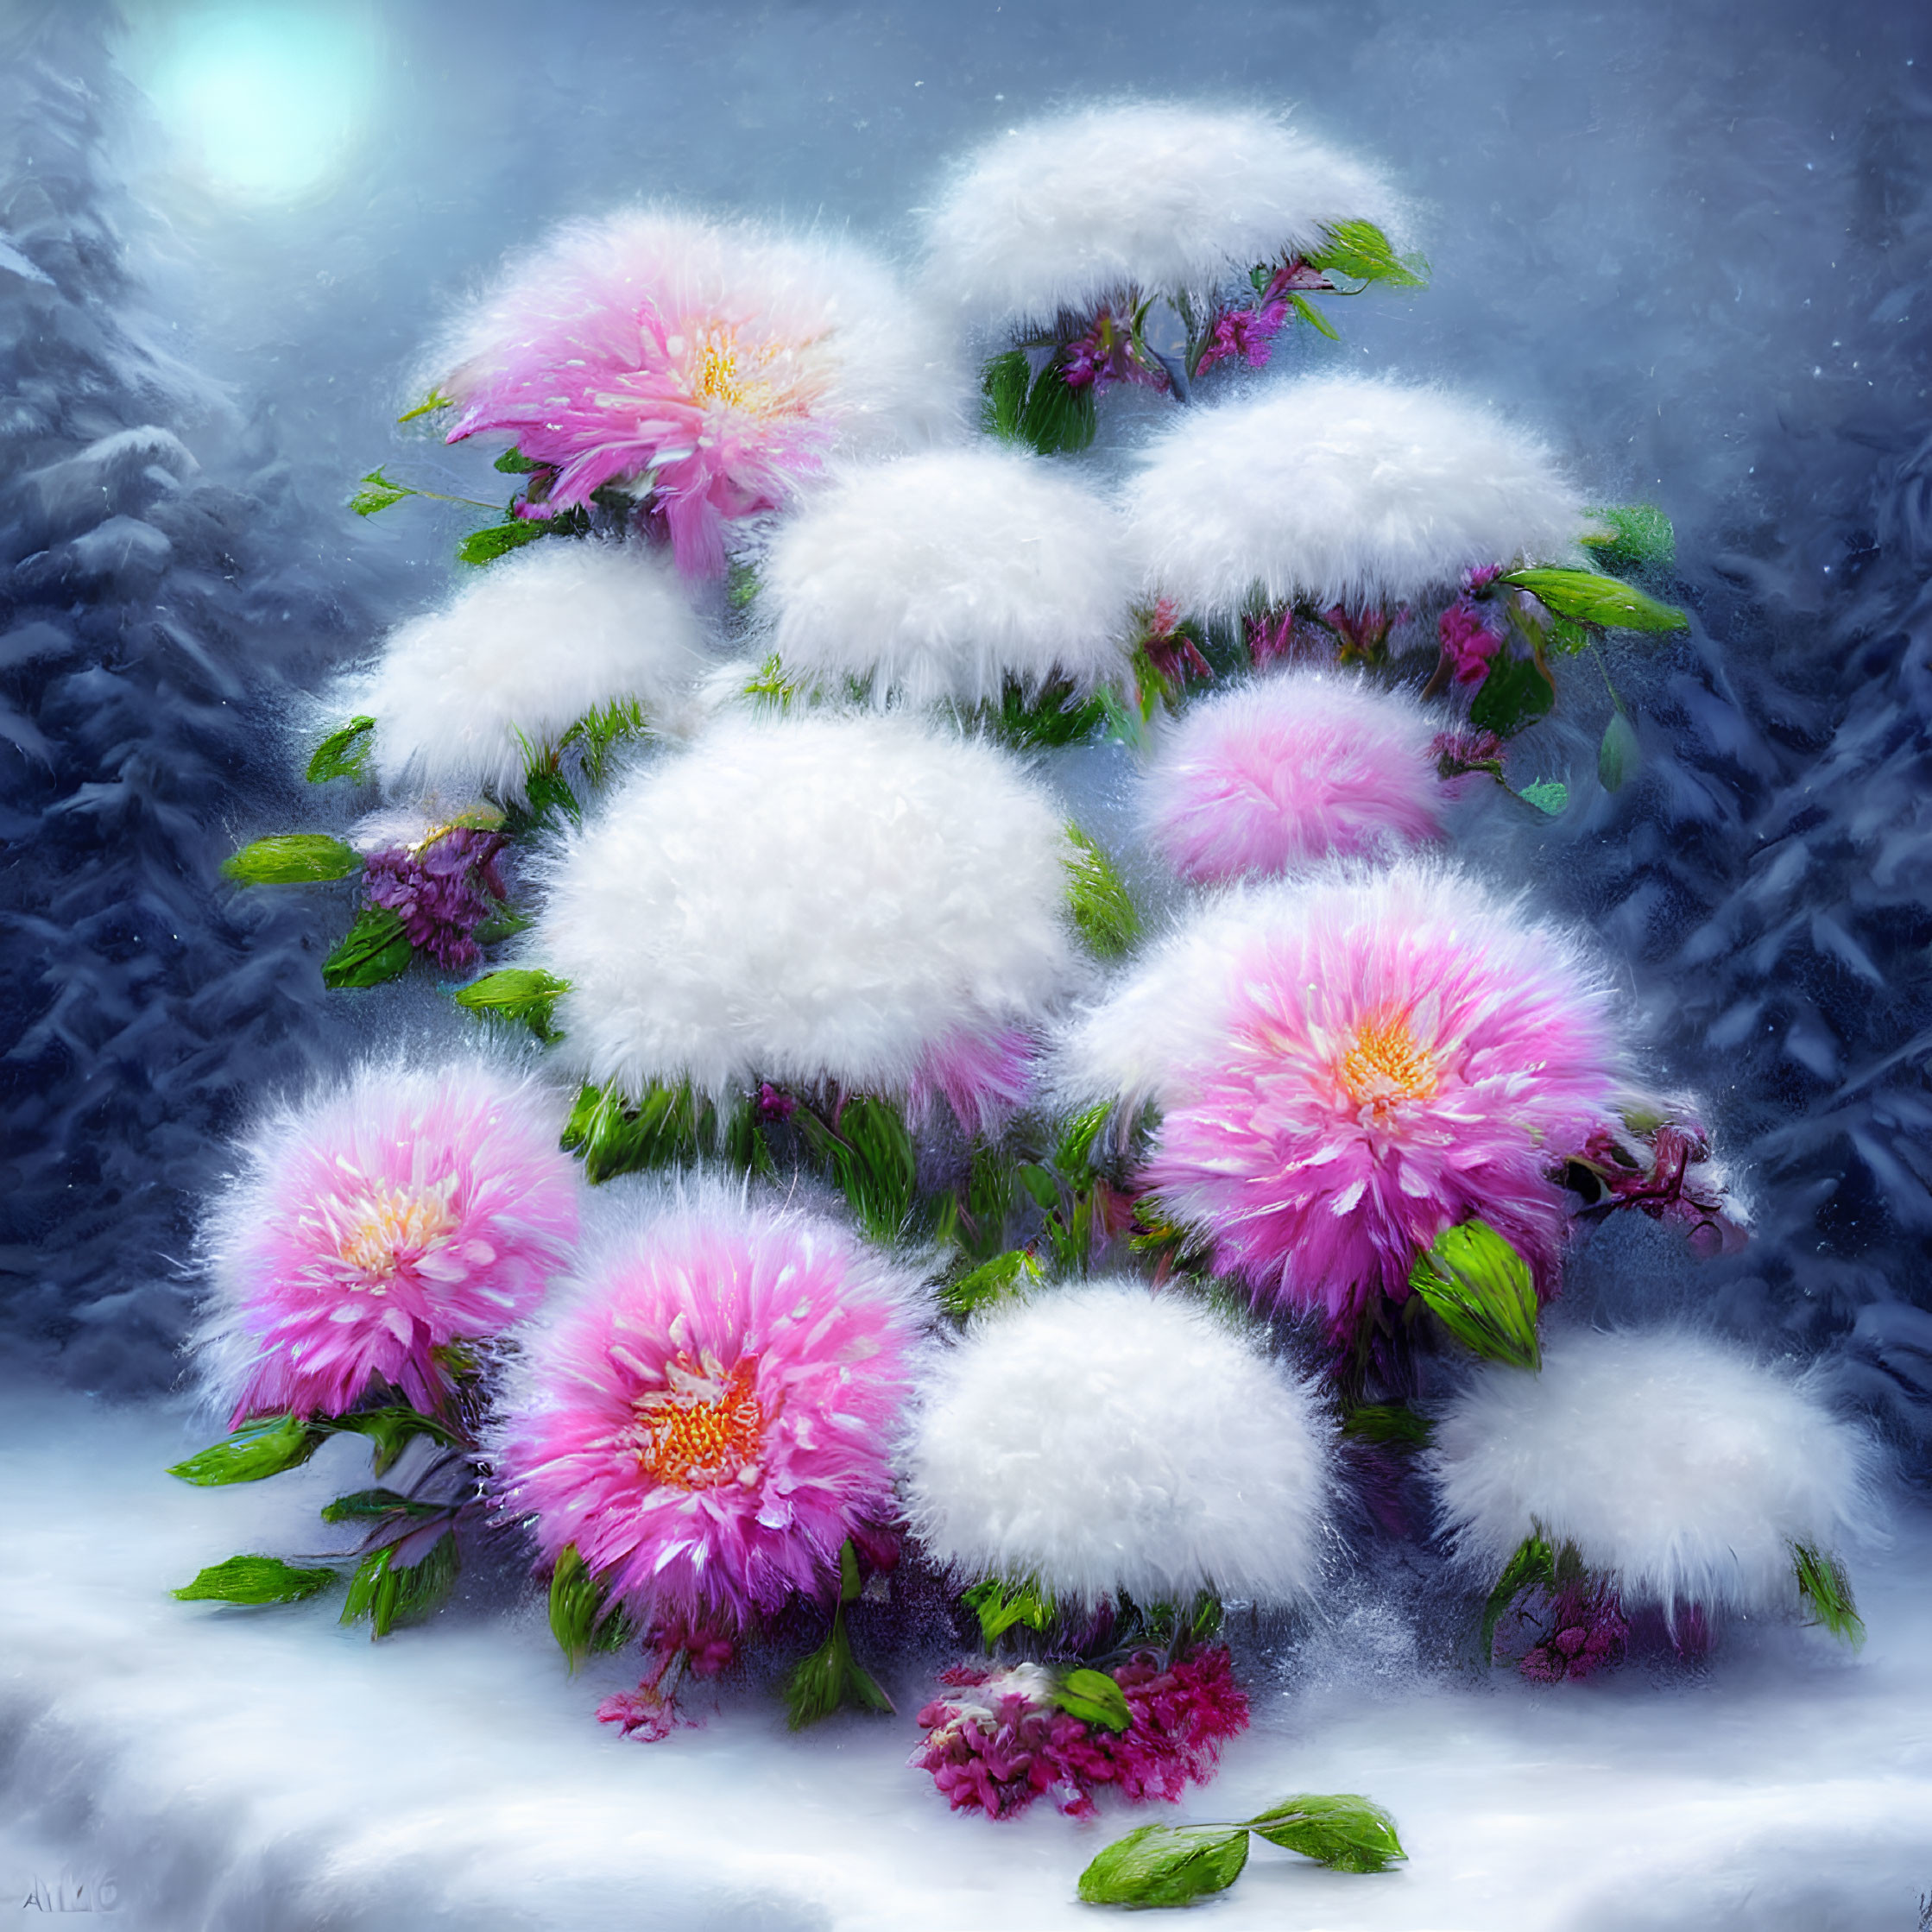 Pink flowers blooming in snowy winter scene